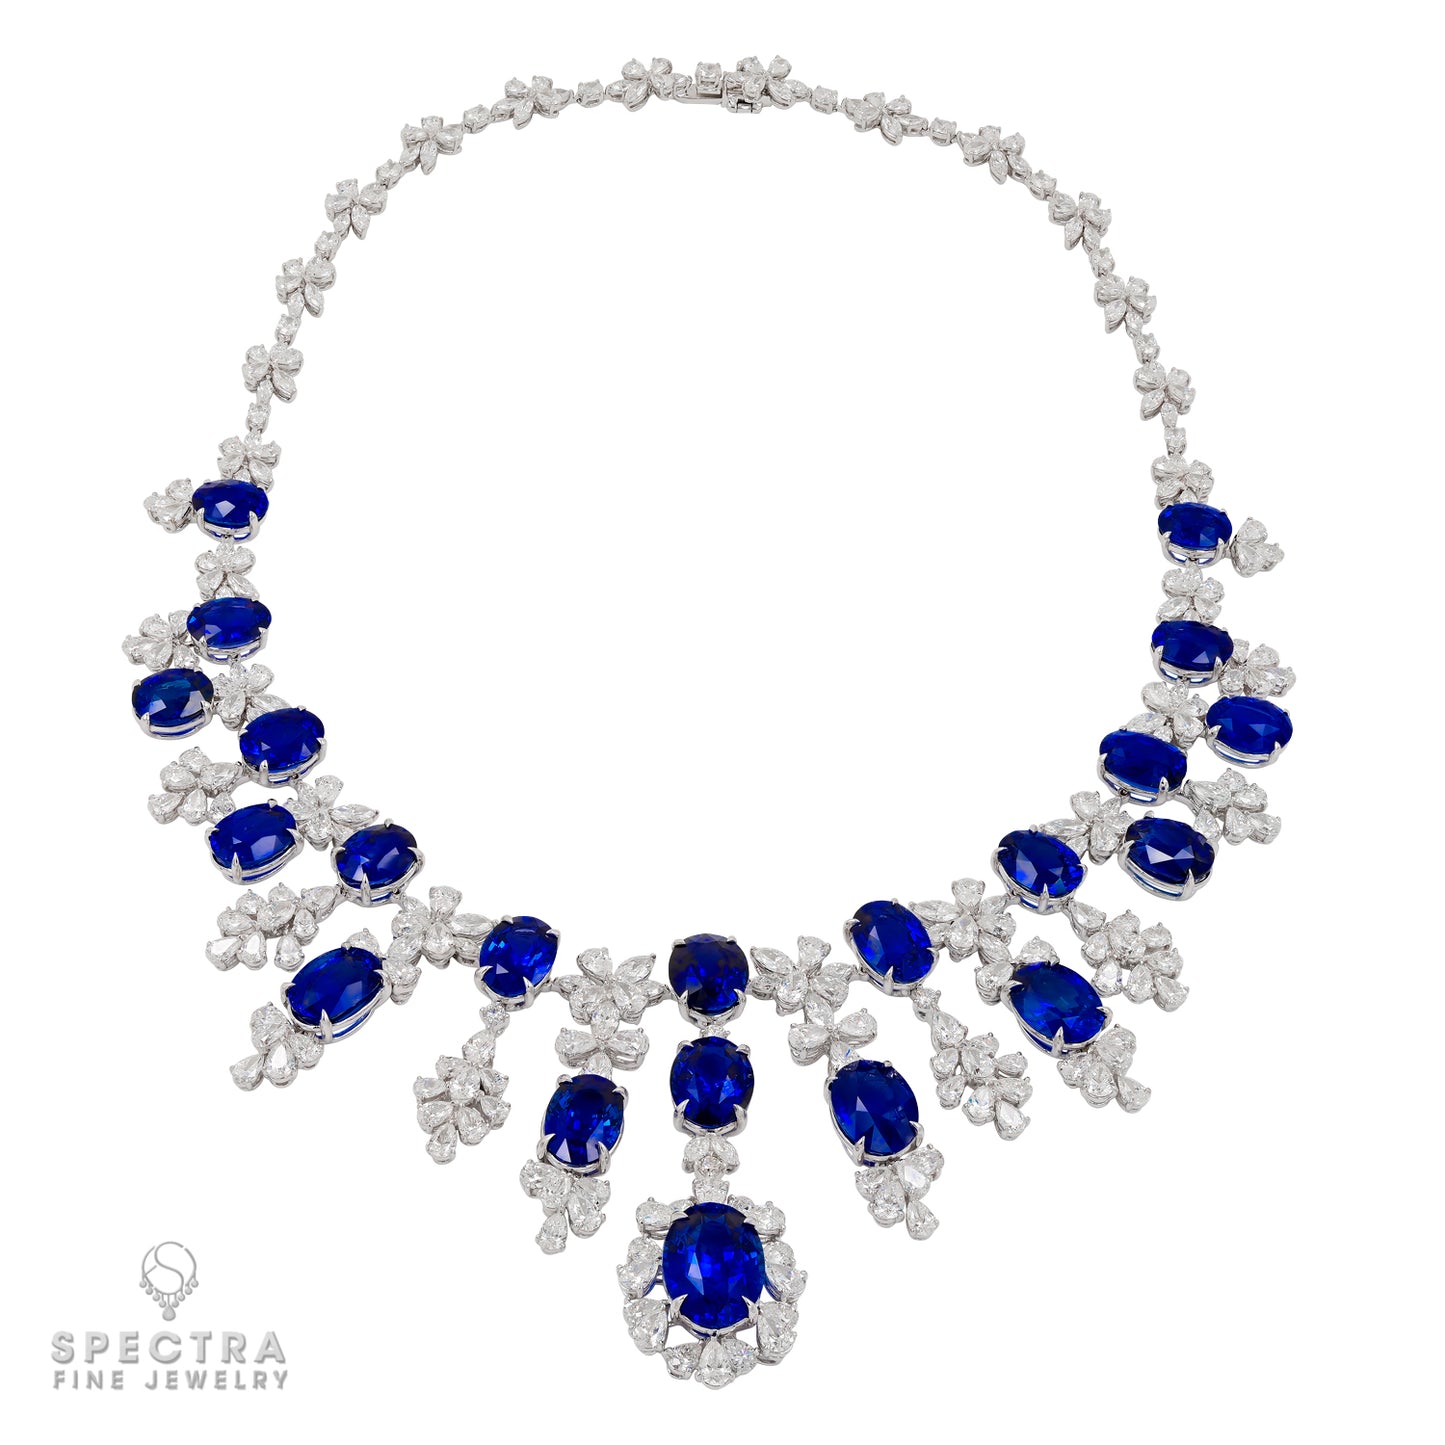 Spectra Fine Jewelry 112.50 cts. Sapphire Diamond Necklace & Earrings